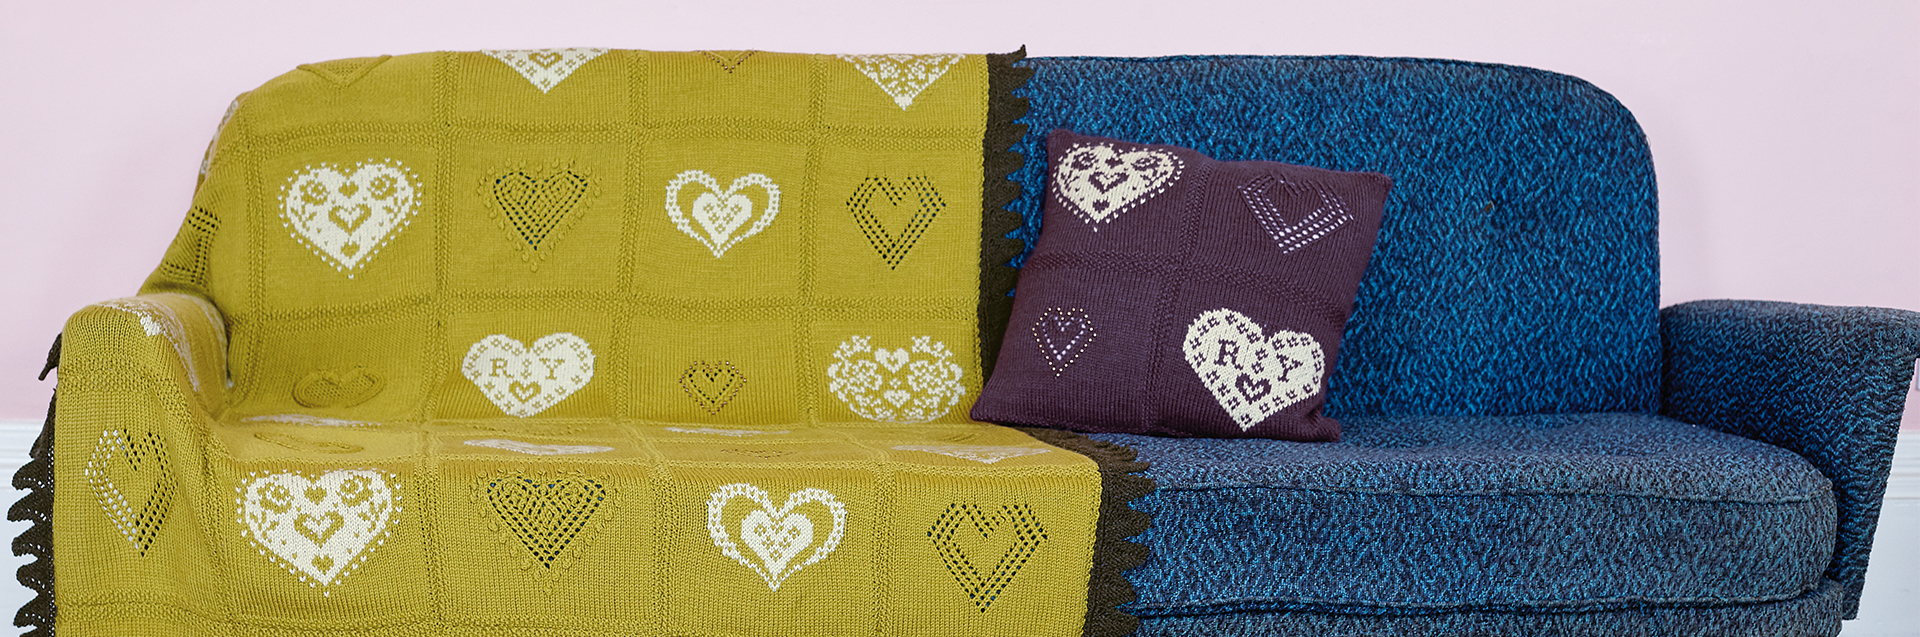 Knitted With Love Knit Along Rowan Knit Along Patterns Rowan